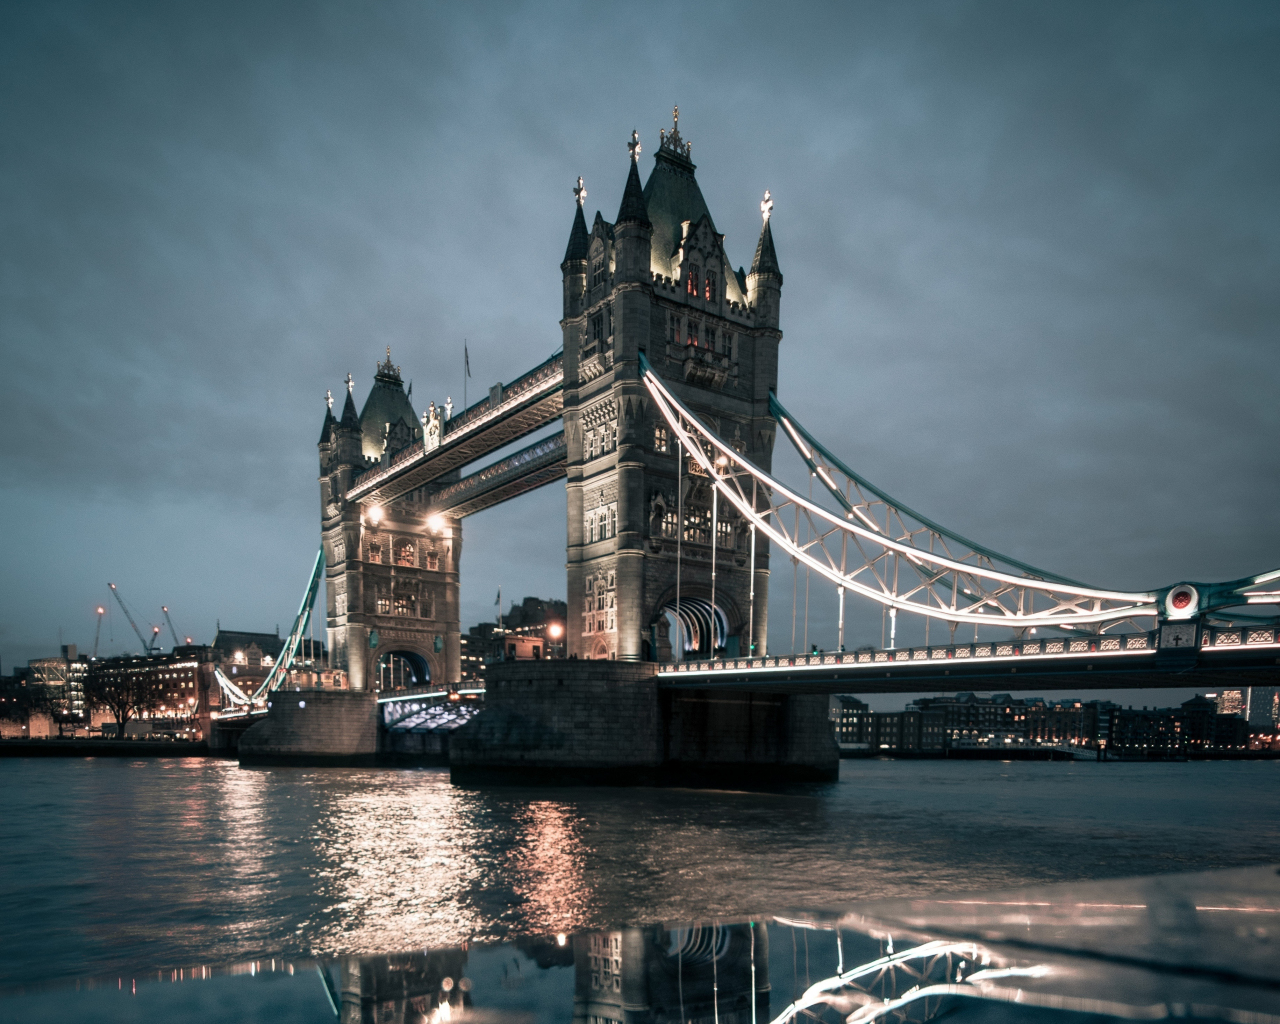 Download wallpaper 1280x1024 london, tower bridge, night, city, standard  5:4 fullscreen wallpaper, 1280x1024 hd background, 18787